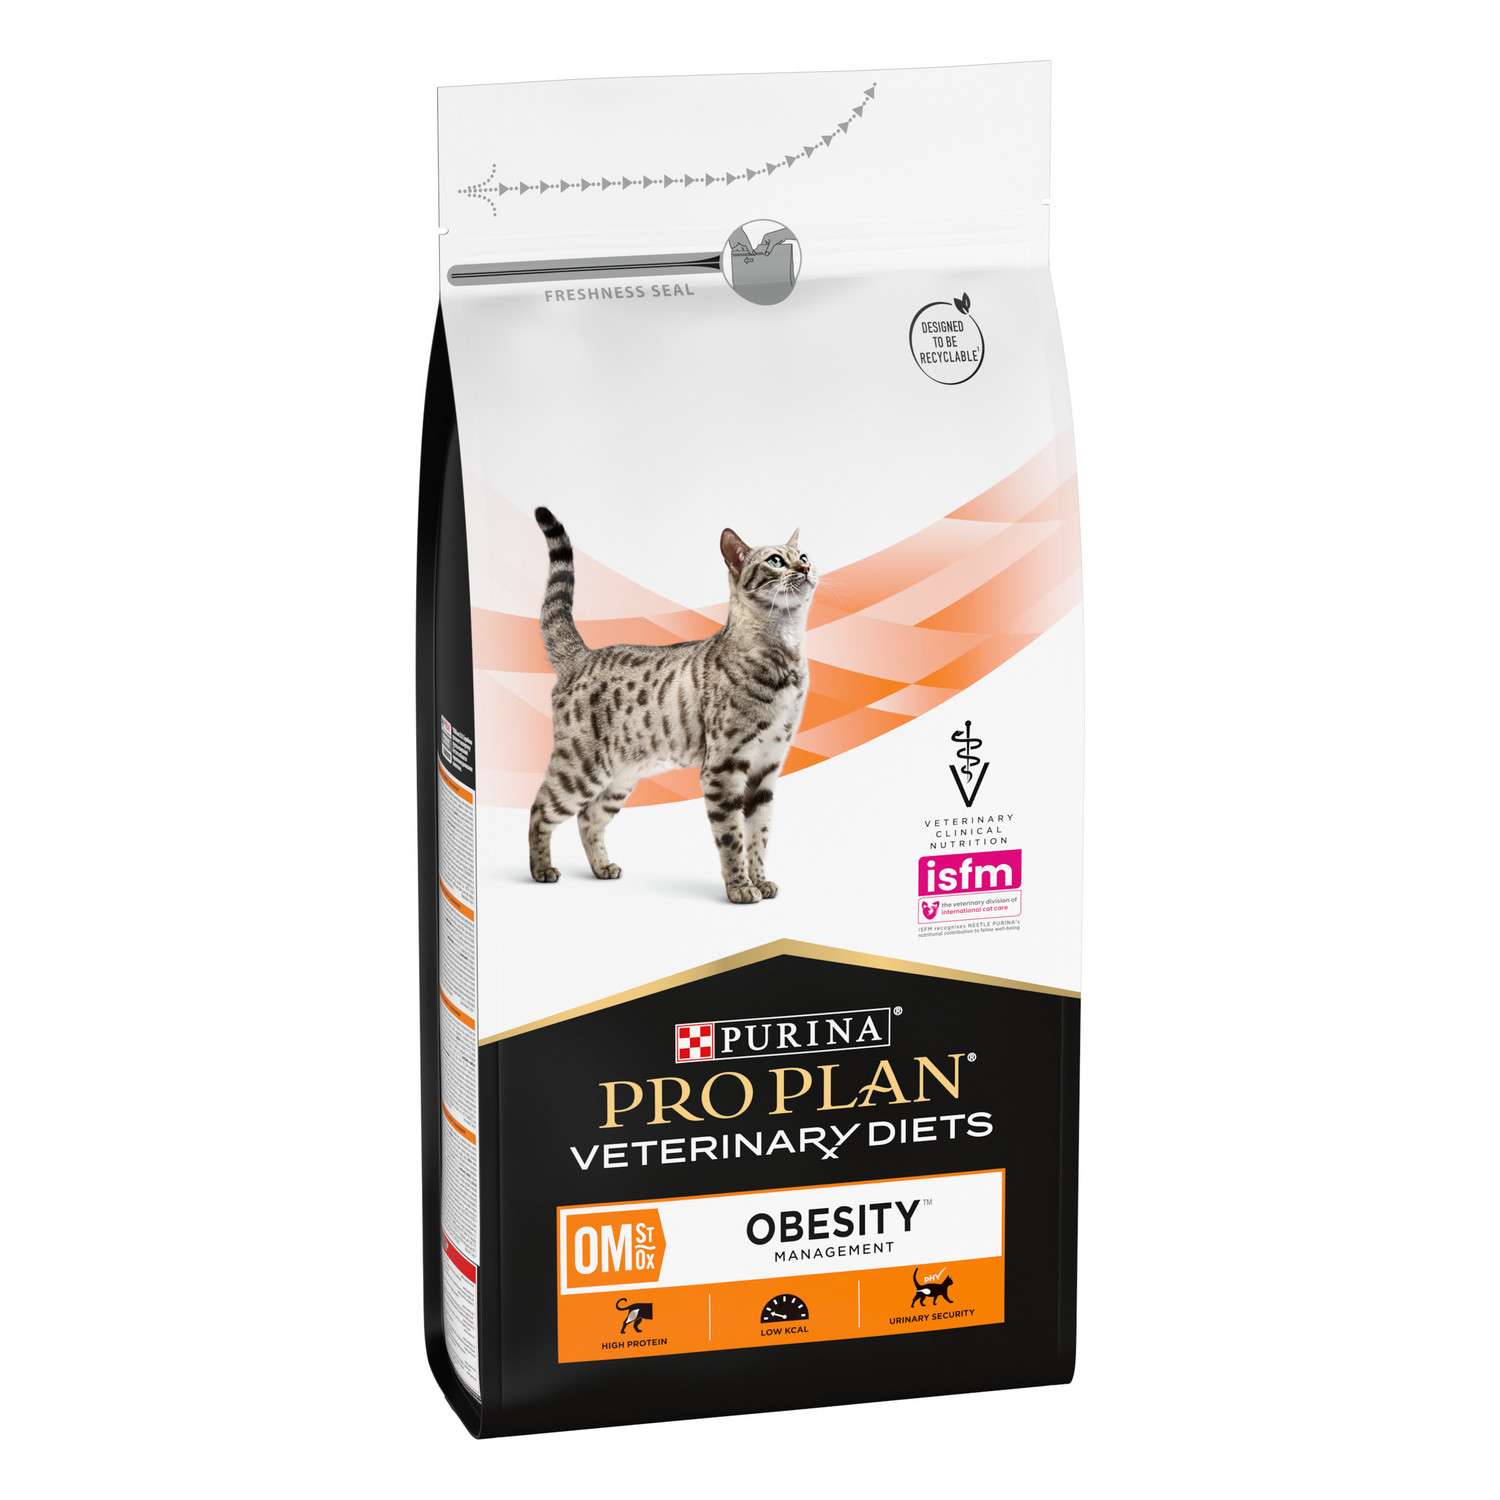 Корм для кошек Purina Pro Plan Veterinary diets OM при ожирении 1.5кг - фото 4